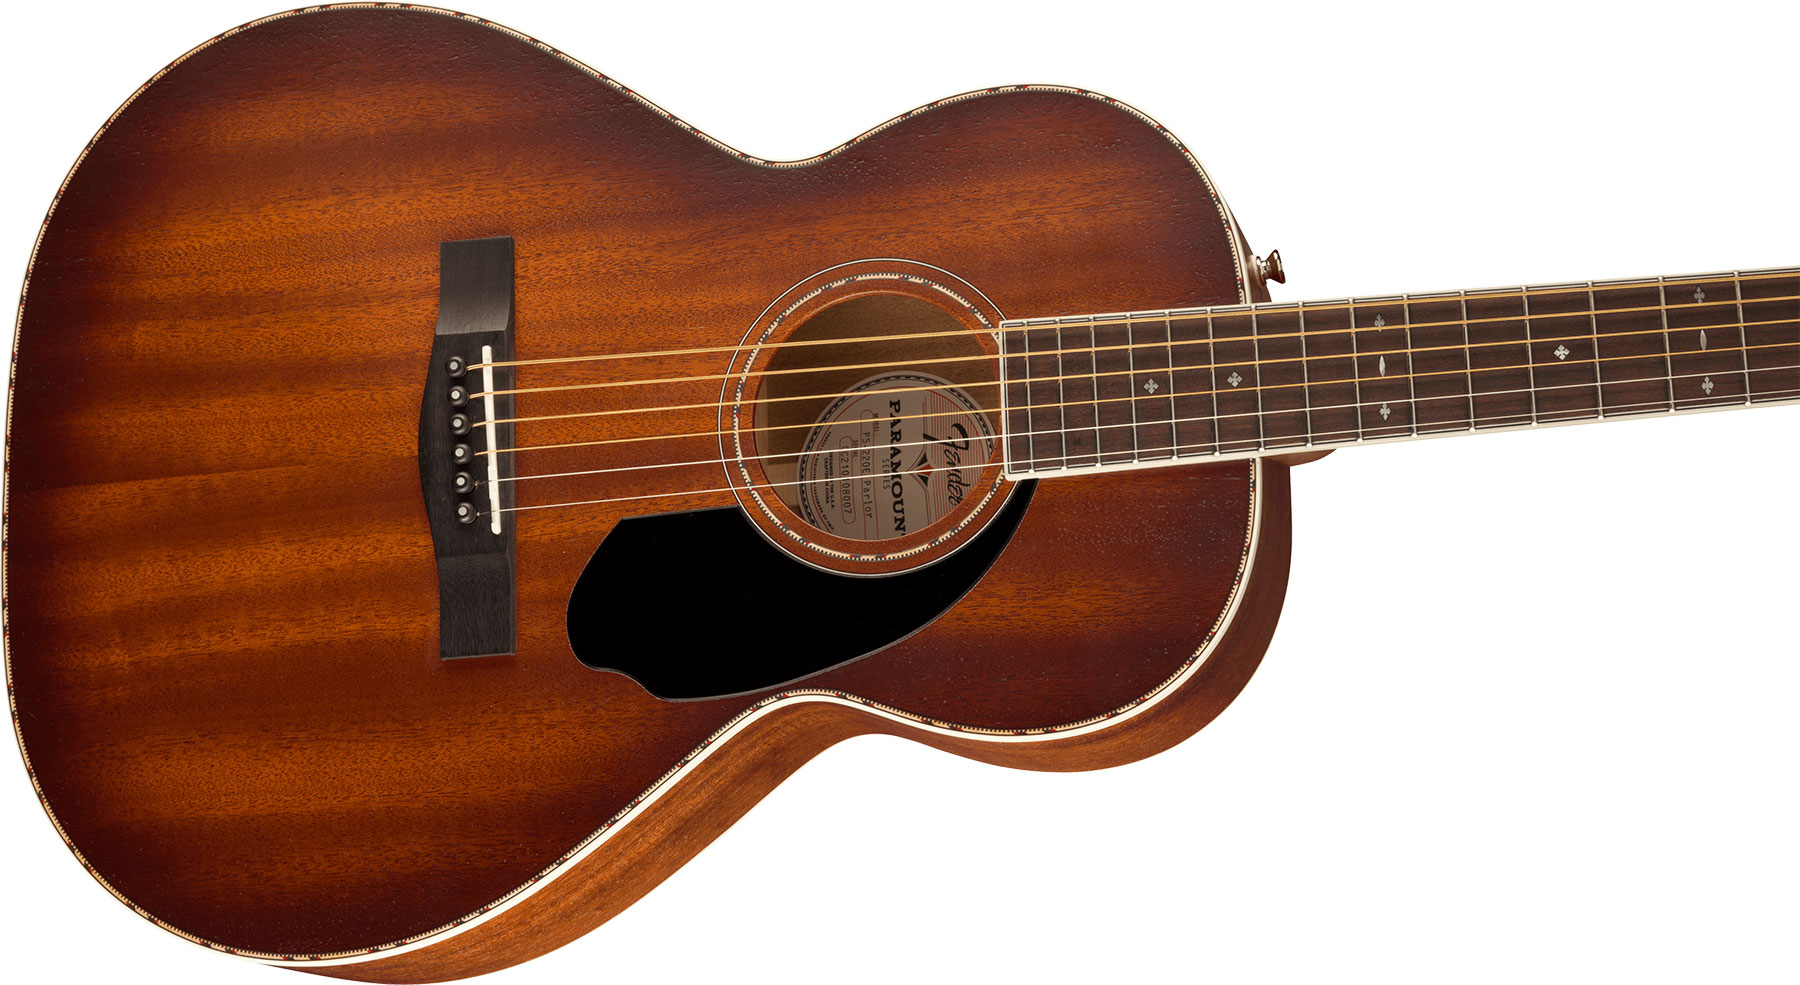 Fender Ps-220e Paramount All Mahogany Parlor Tout Acajou Ova - Aged Cognac Burst - Electro acoustic guitar - Variation 2